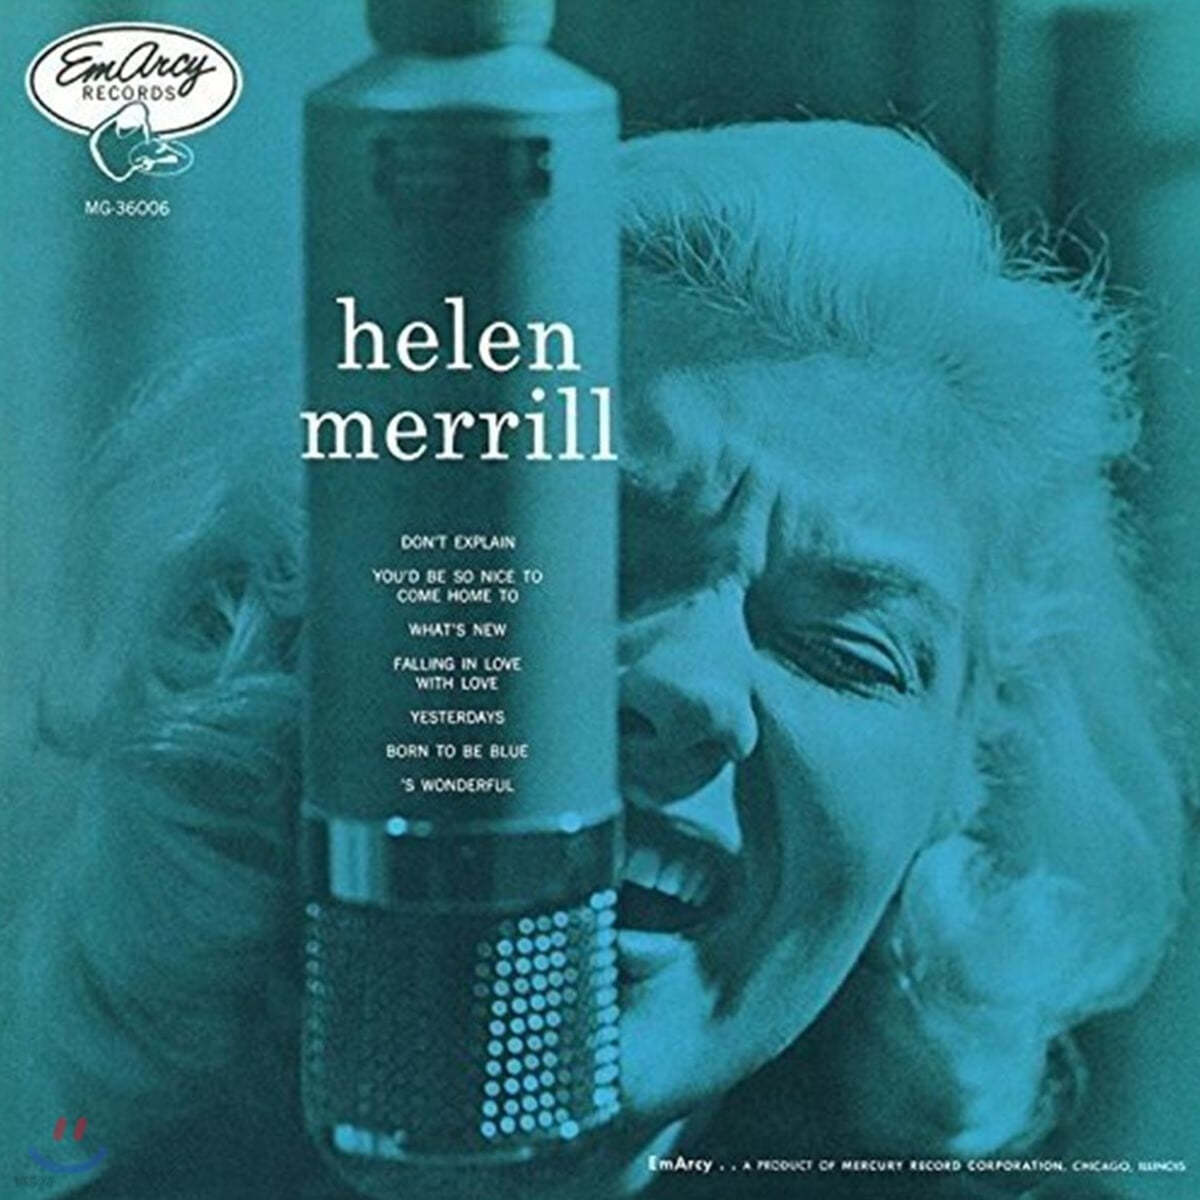 Helen Merrill (헬렌 메릴) - Helen Merrill With Clifford Brown 